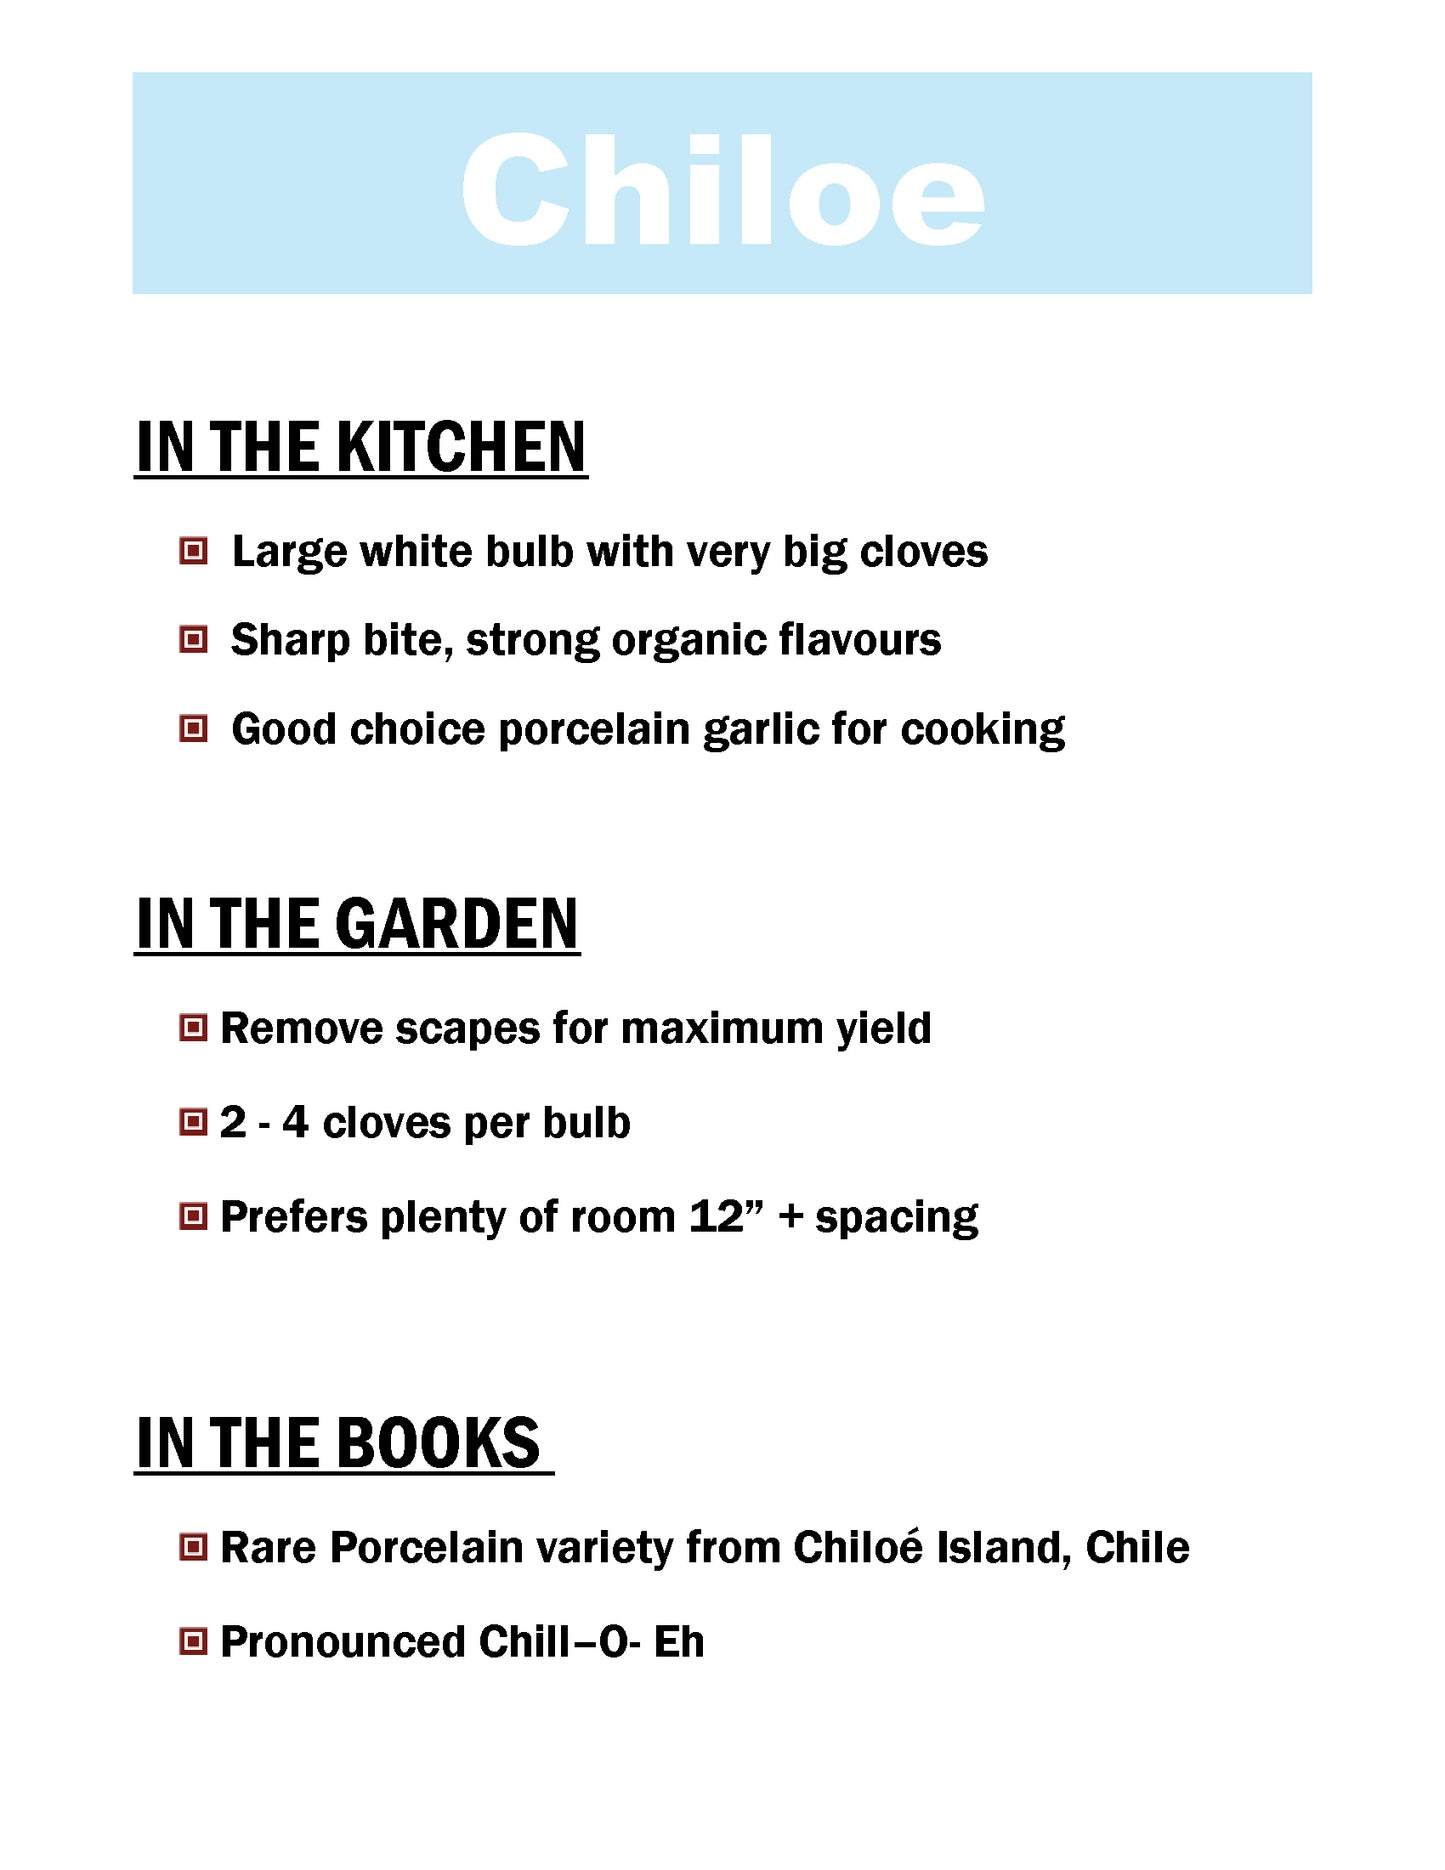 Chiloe garlic description card by Garlicloves